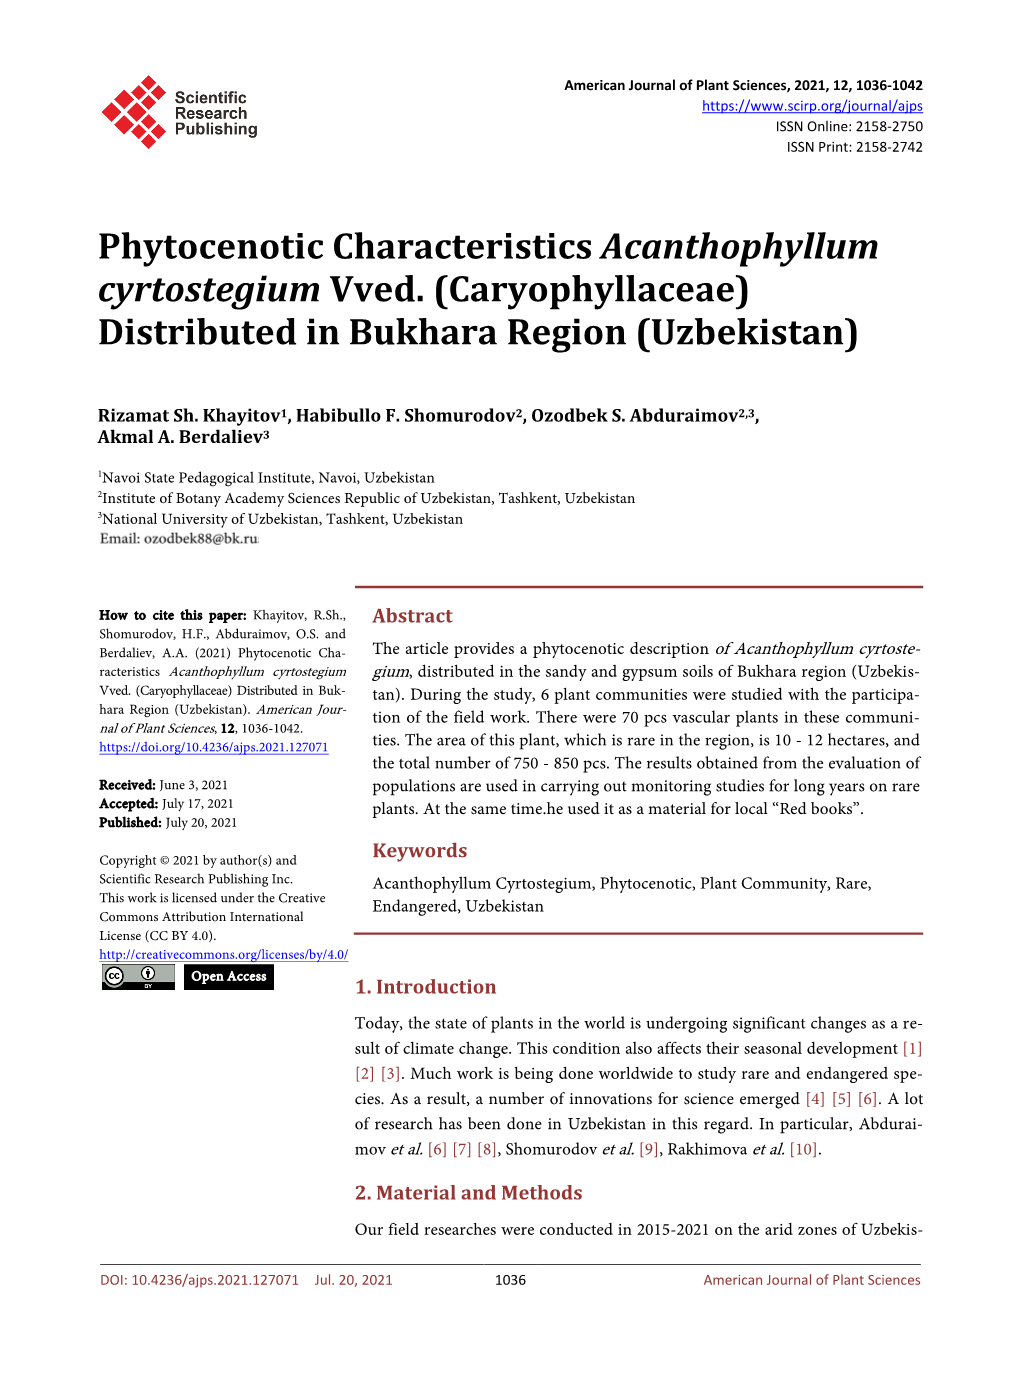 Phytocenotic Characteristics Acanthophyllum Cyrtostegium Vved. (Caryophyllaceae) Distributed in Bukhara Region (Uzbekistan)